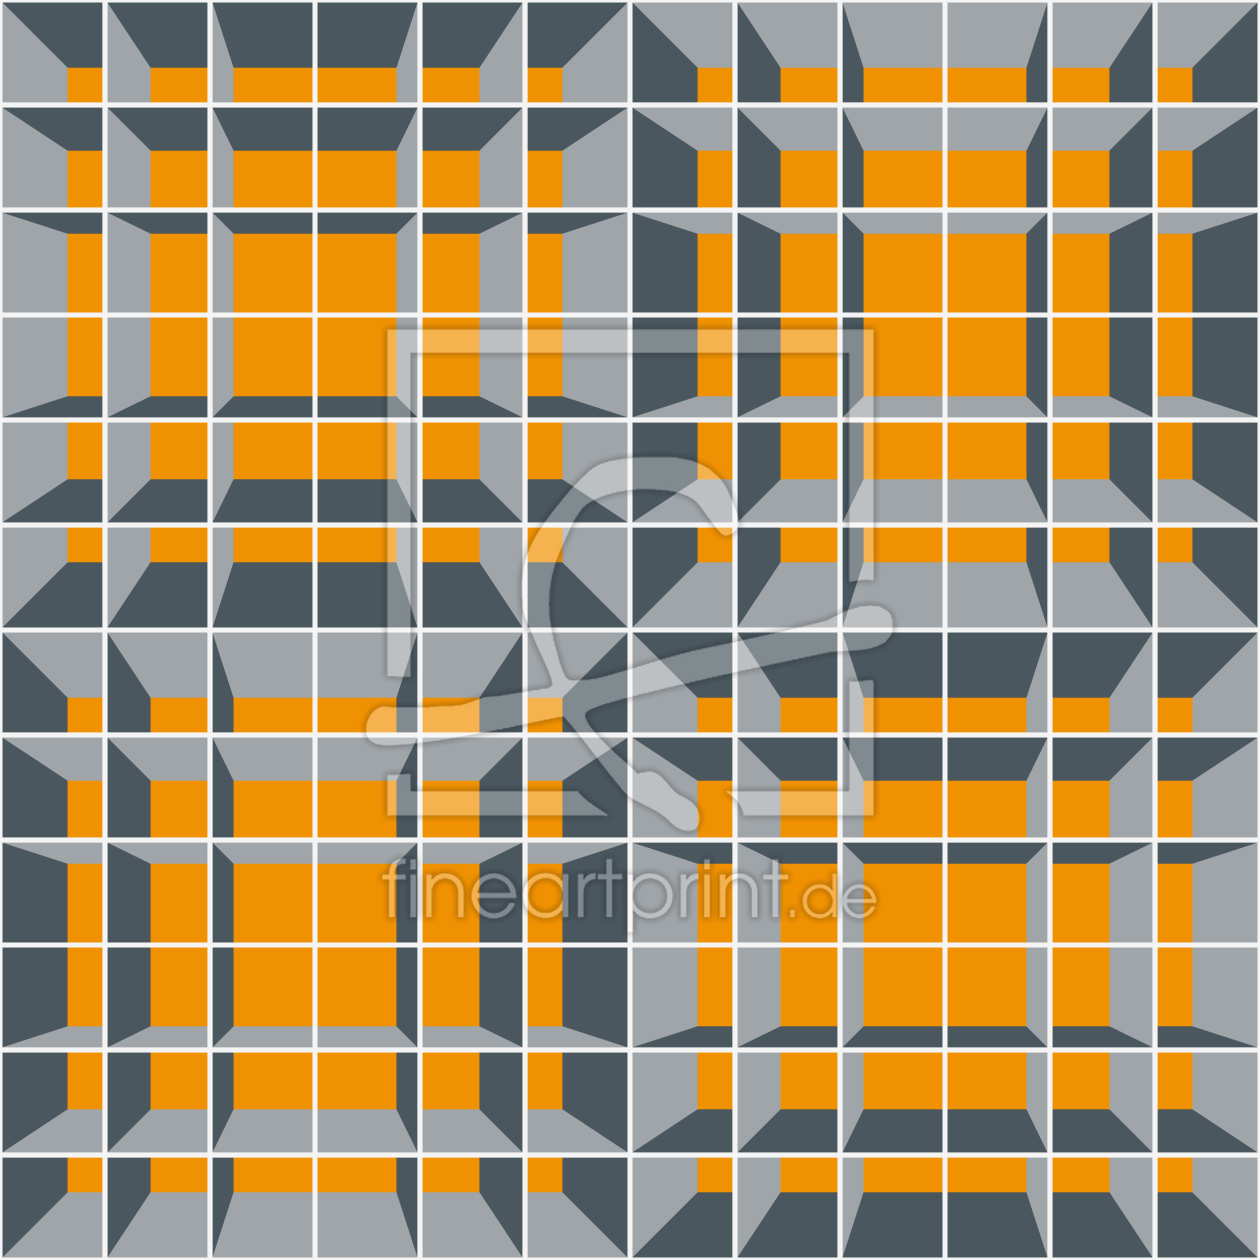 Bild-Nr.: 9009820 Tribut An MC Escher erstellt von patterndesigns-com